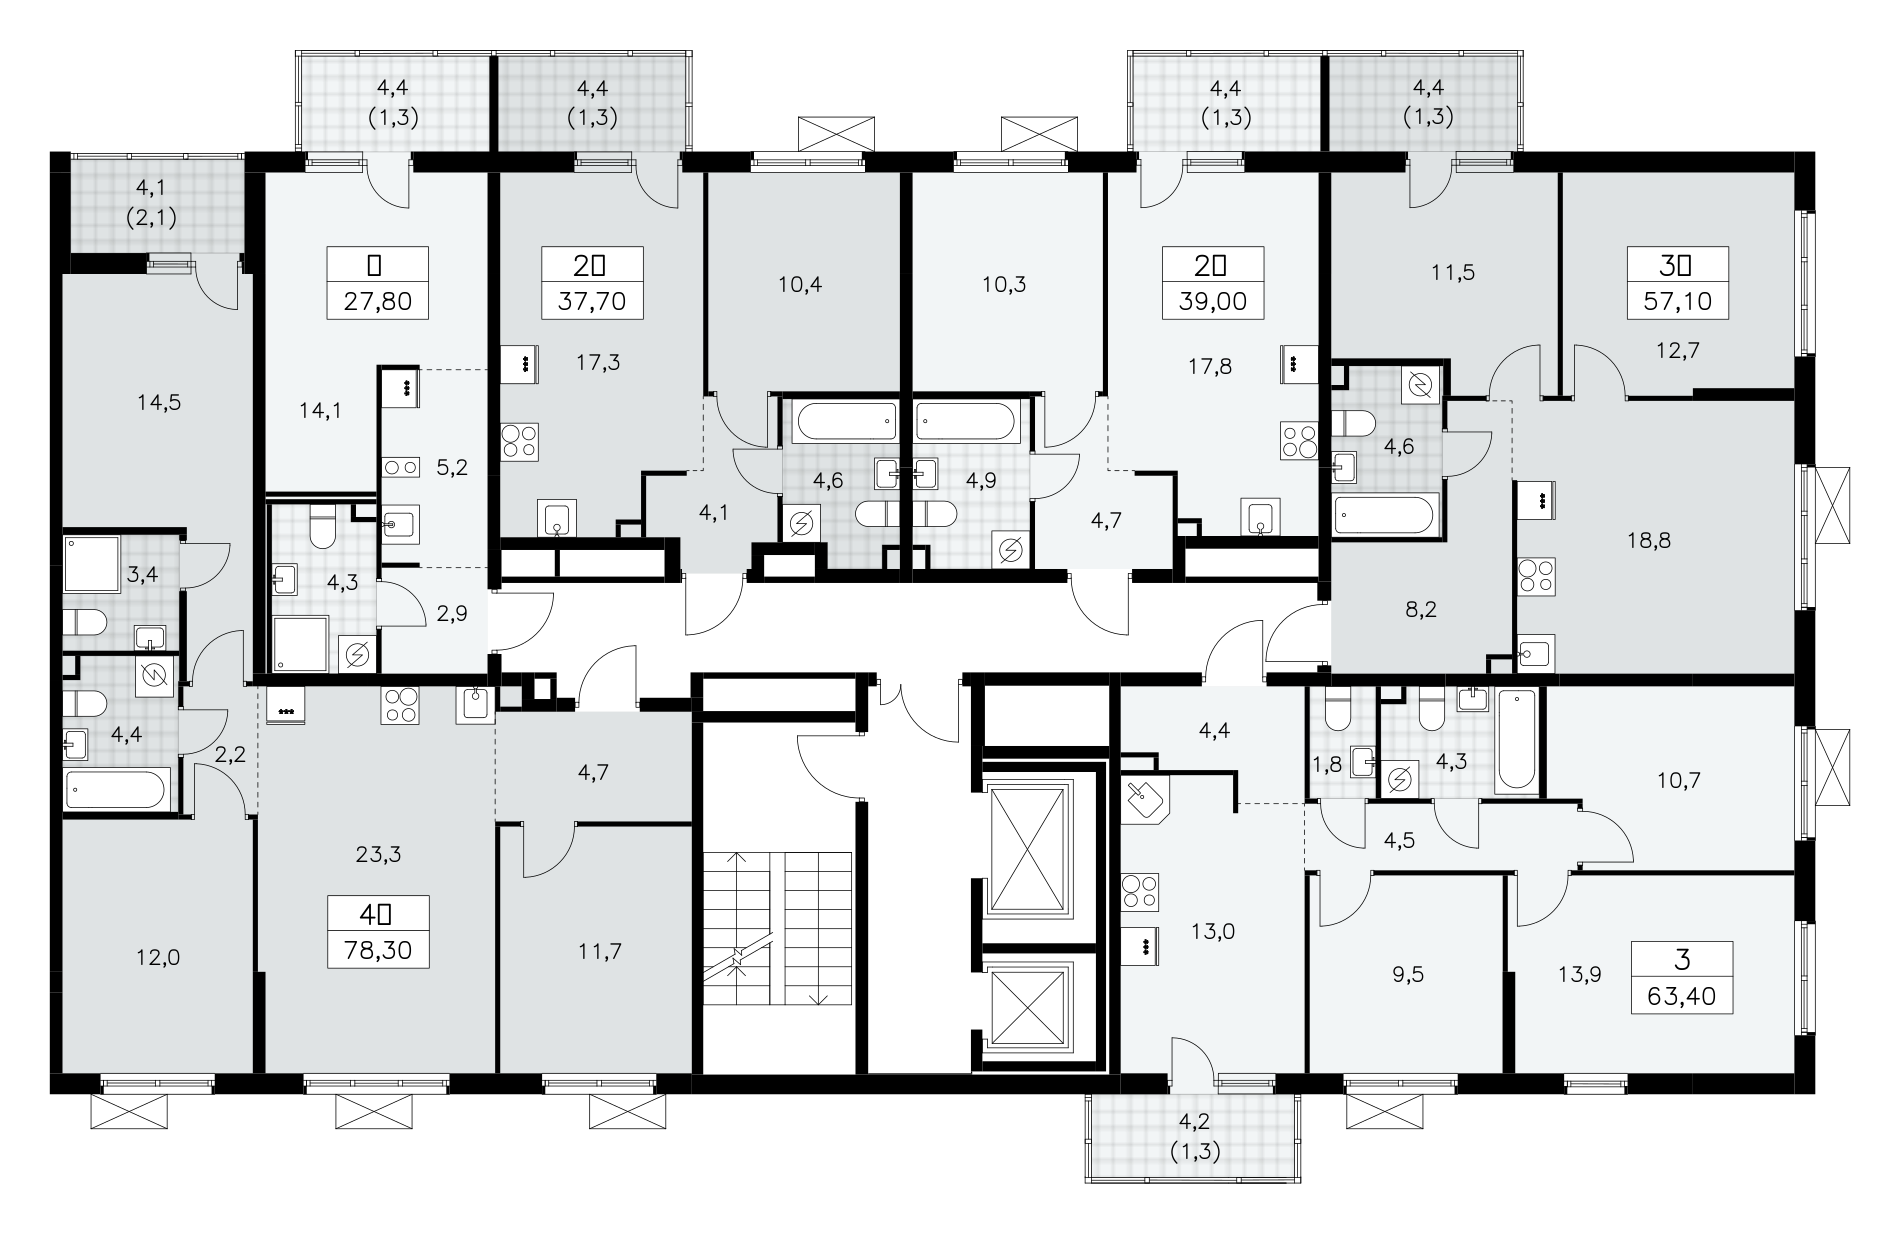 3-комнатная (Евро) квартира, 57.1 м² - планировка этажа